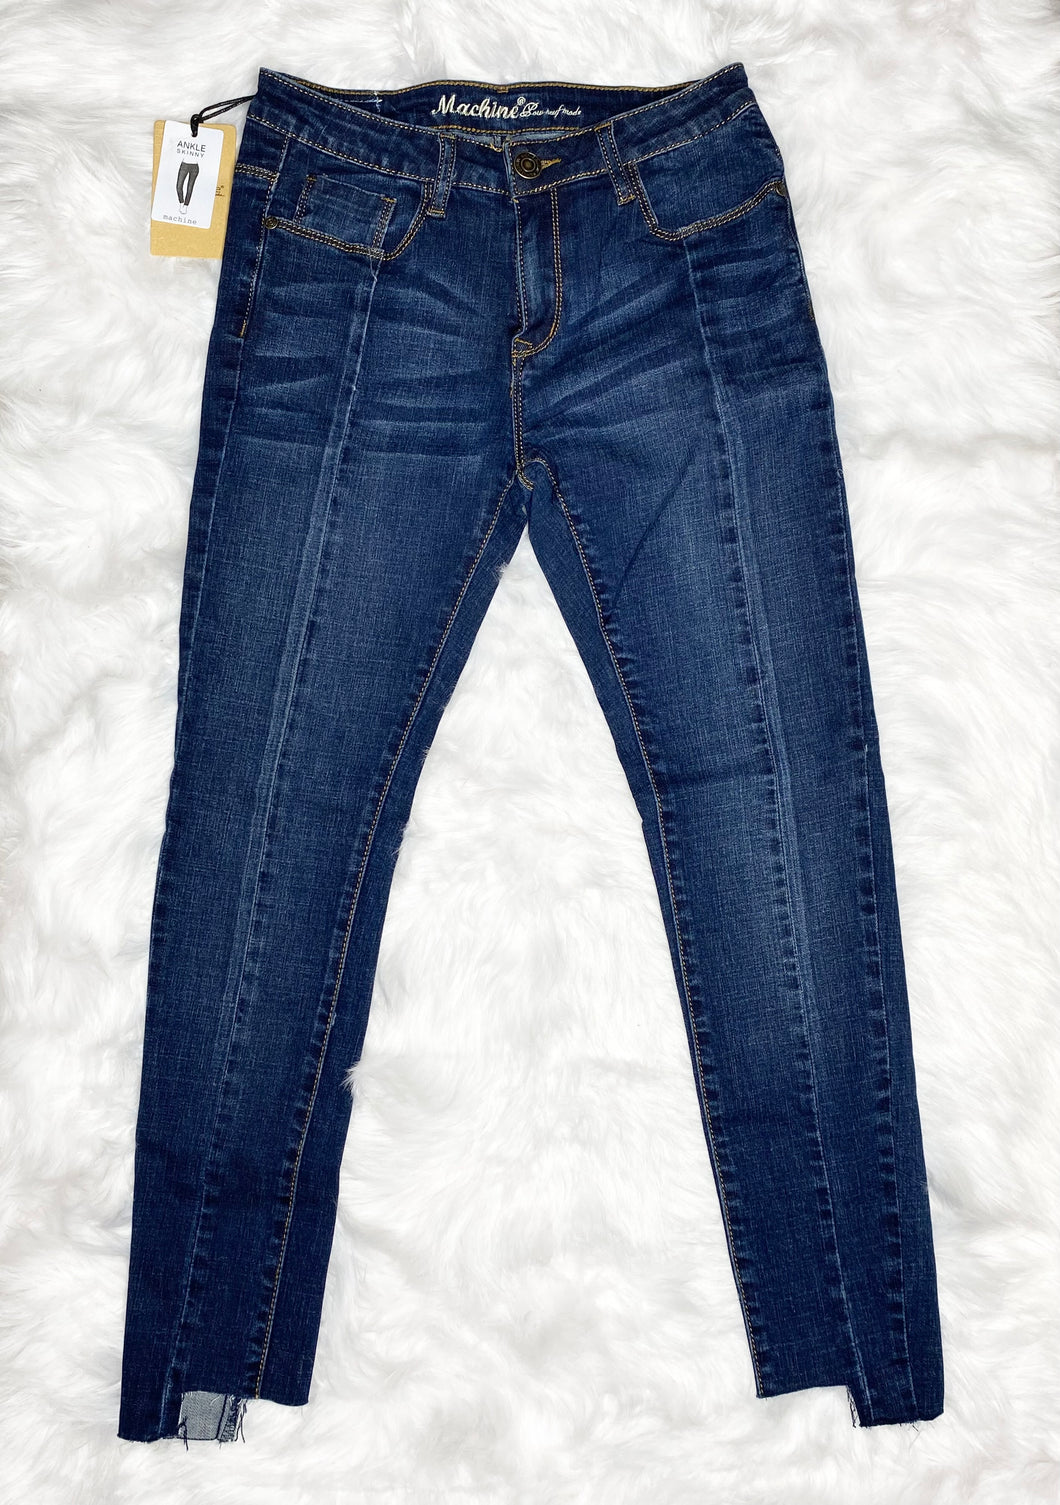 Blue Jeans - Ankle Length